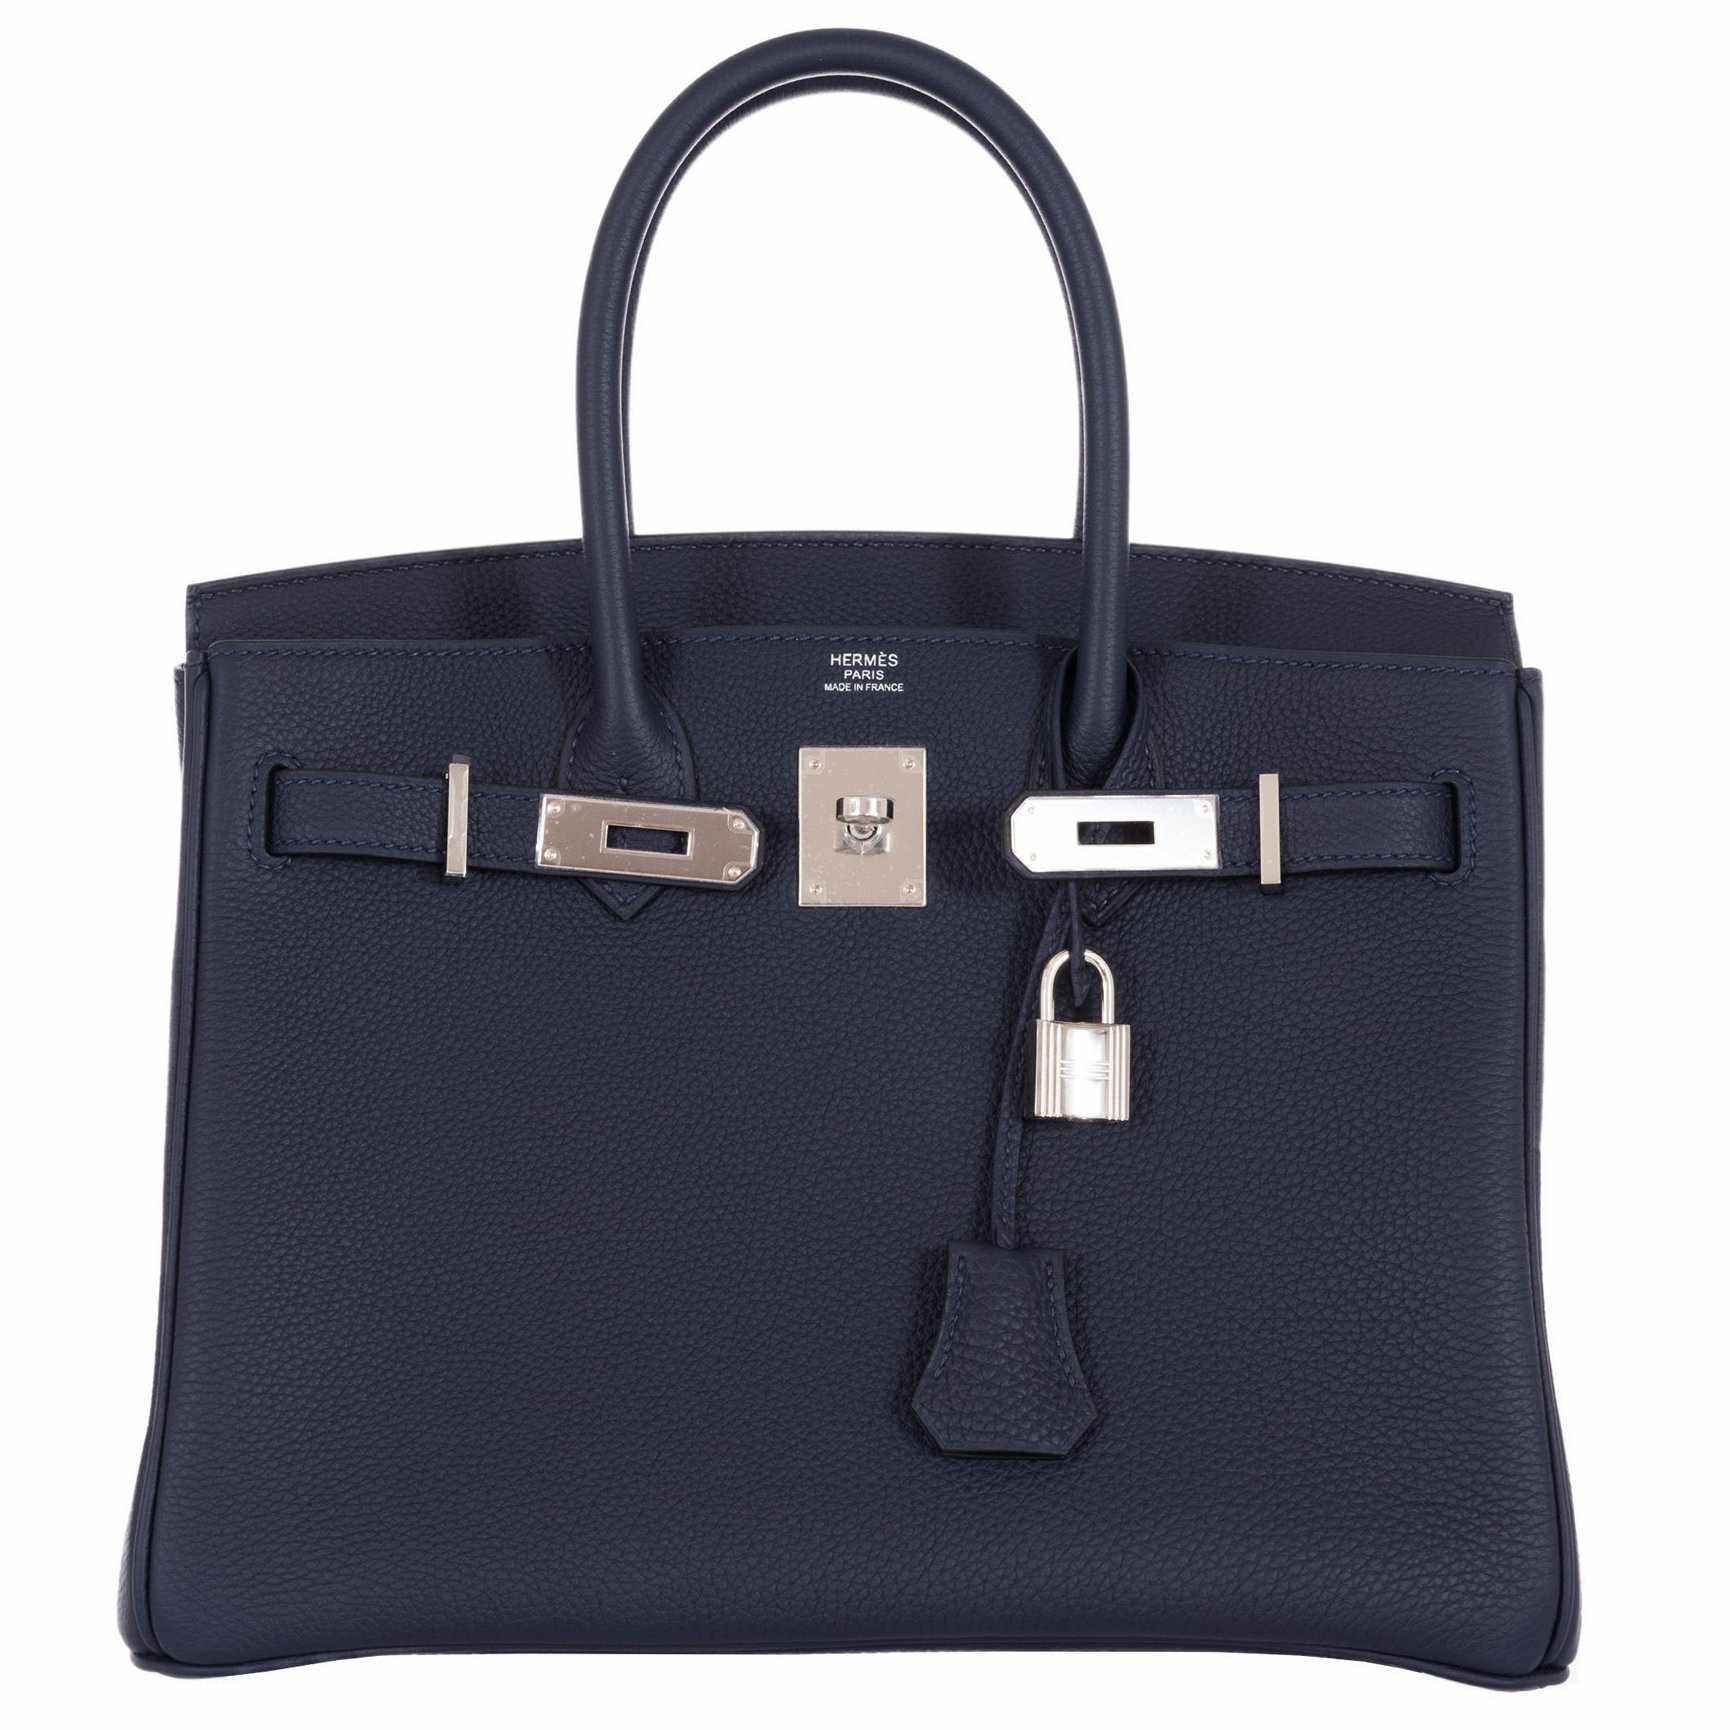 Hermès Birkin 30 handbag in Togo color Cuivre with Palladium silver  hardware at 1stDibs